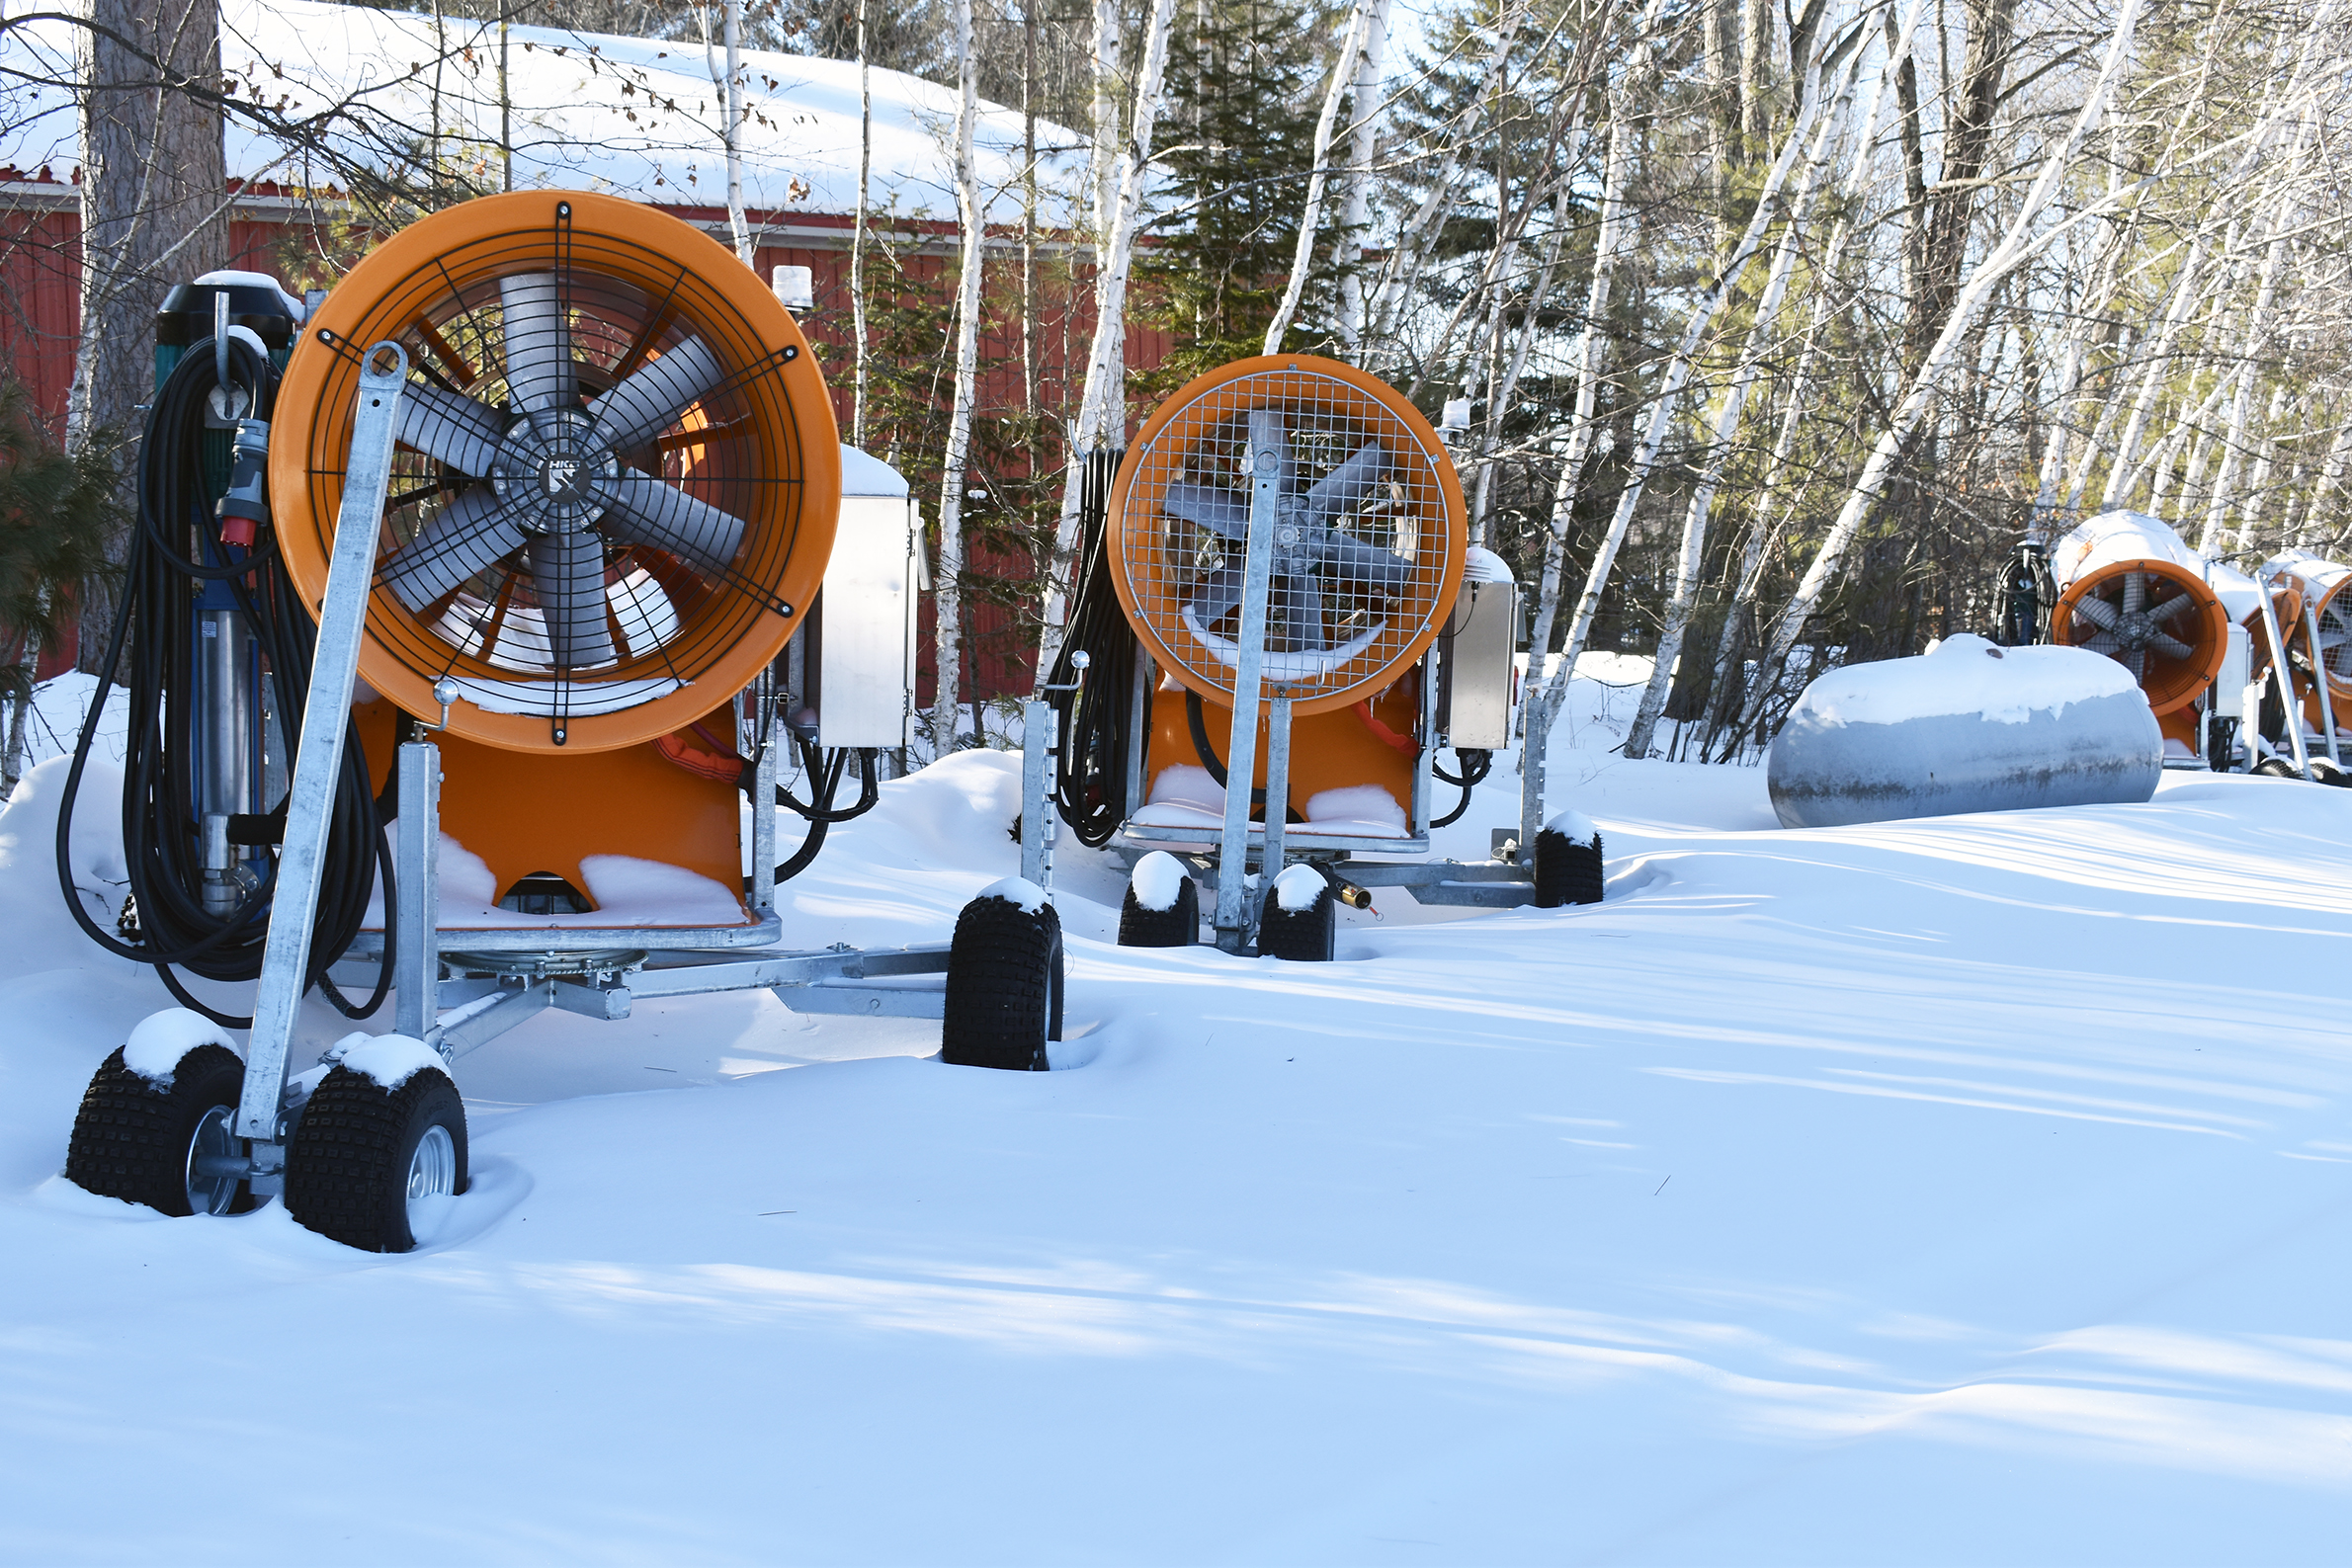 Snow machines used for snowmaking on Birkie loops